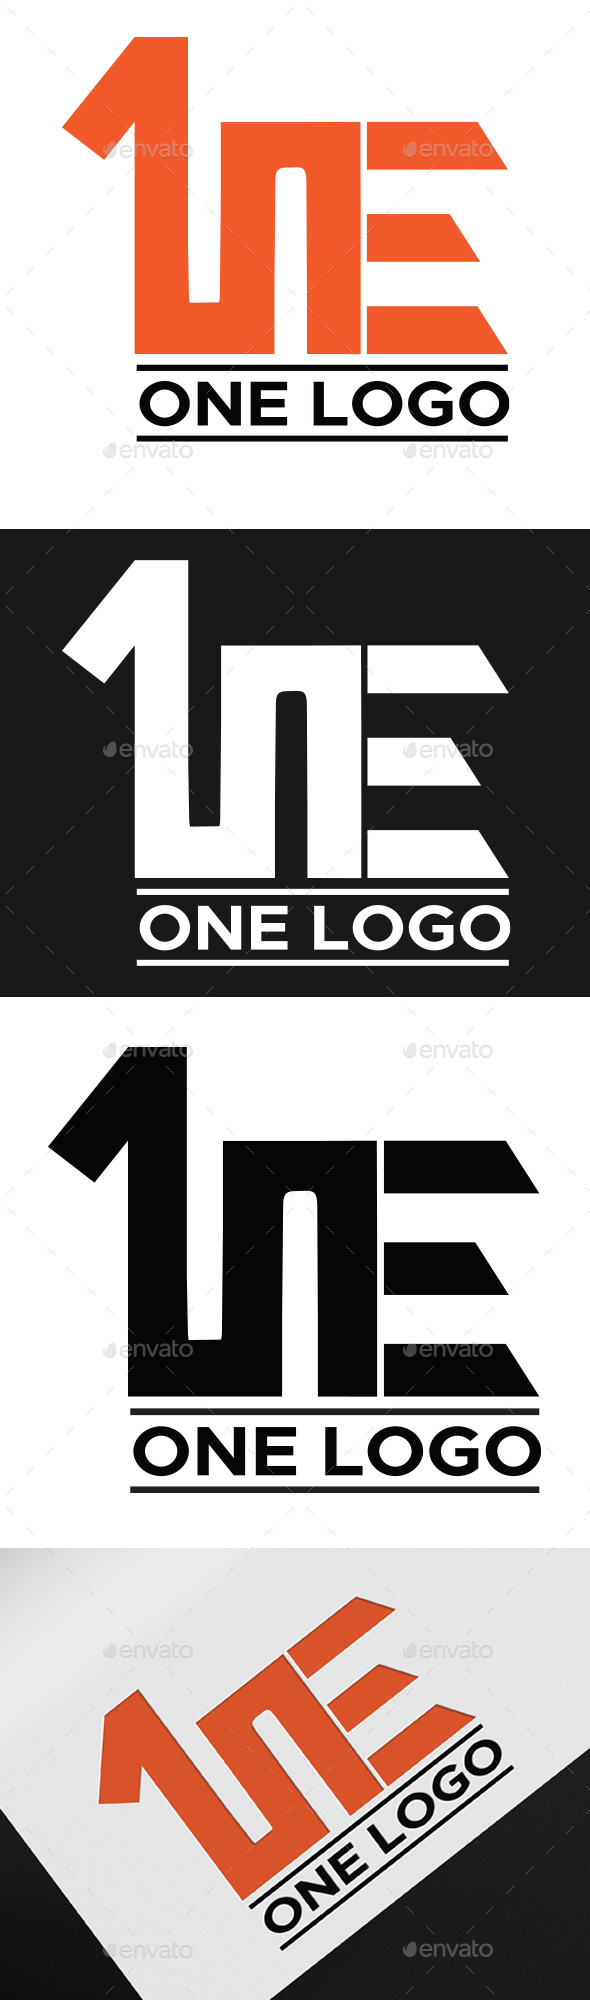 ONE Logo - 1 Logo